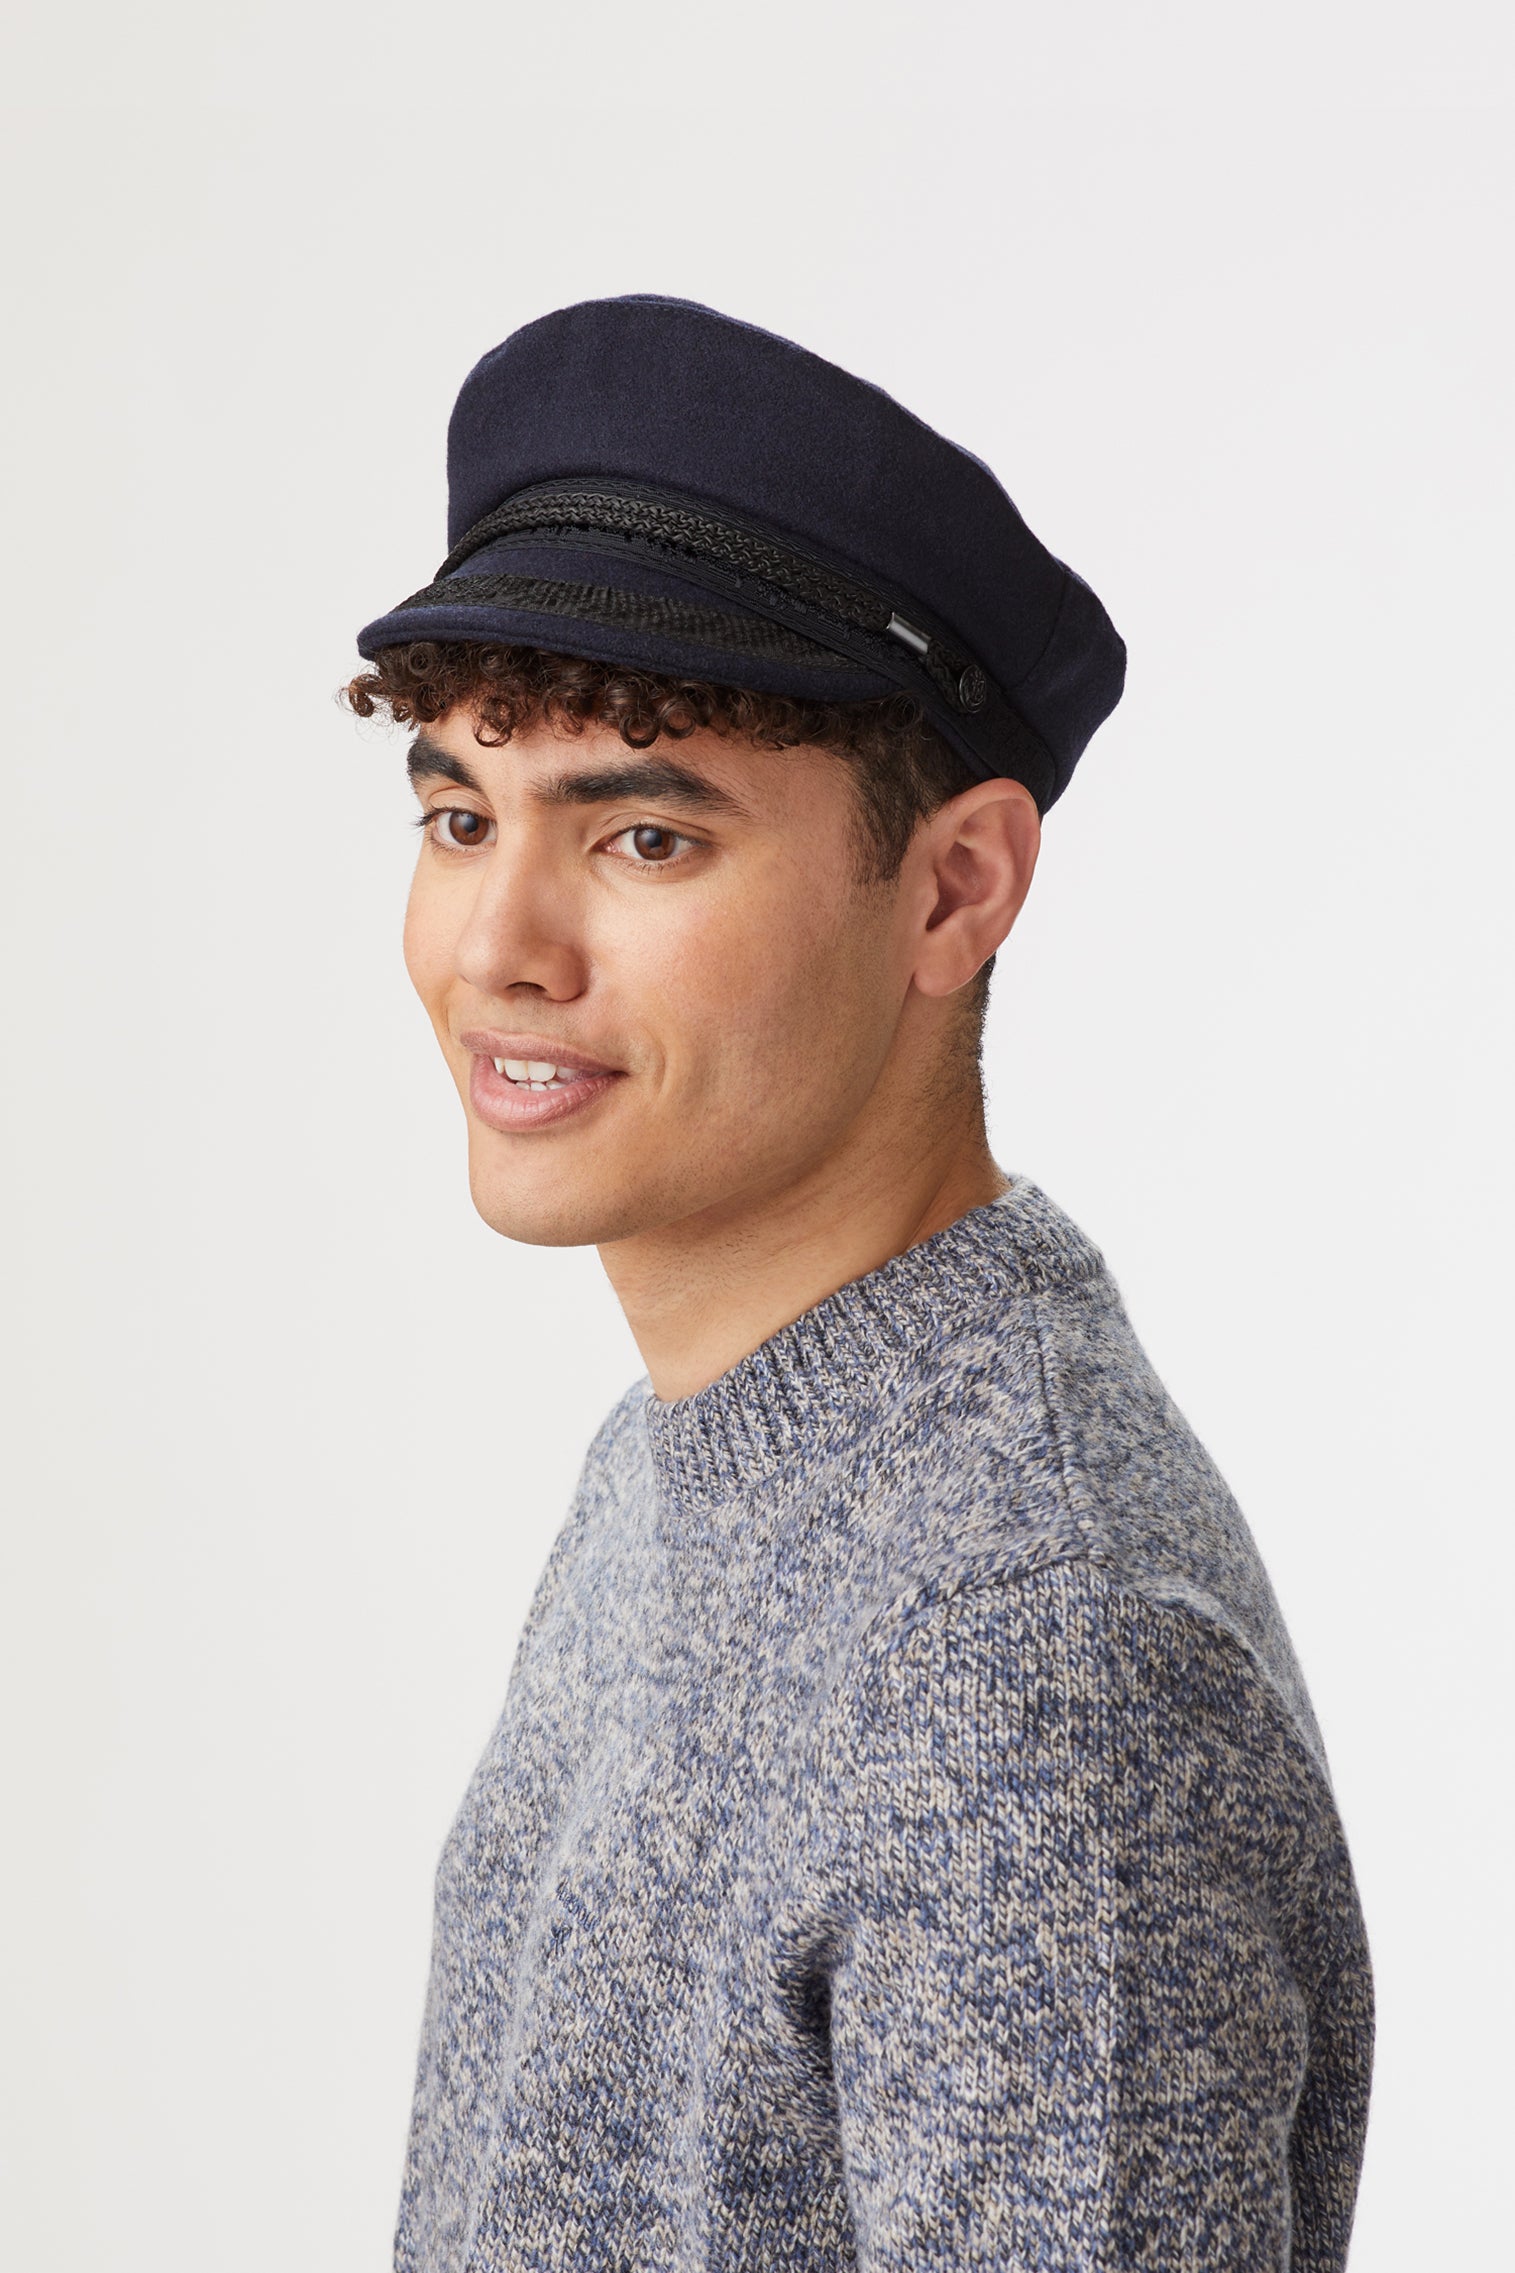 Skipper Cap - Hats for Oval Face Shapes - Lock & Co. Hatters London UK